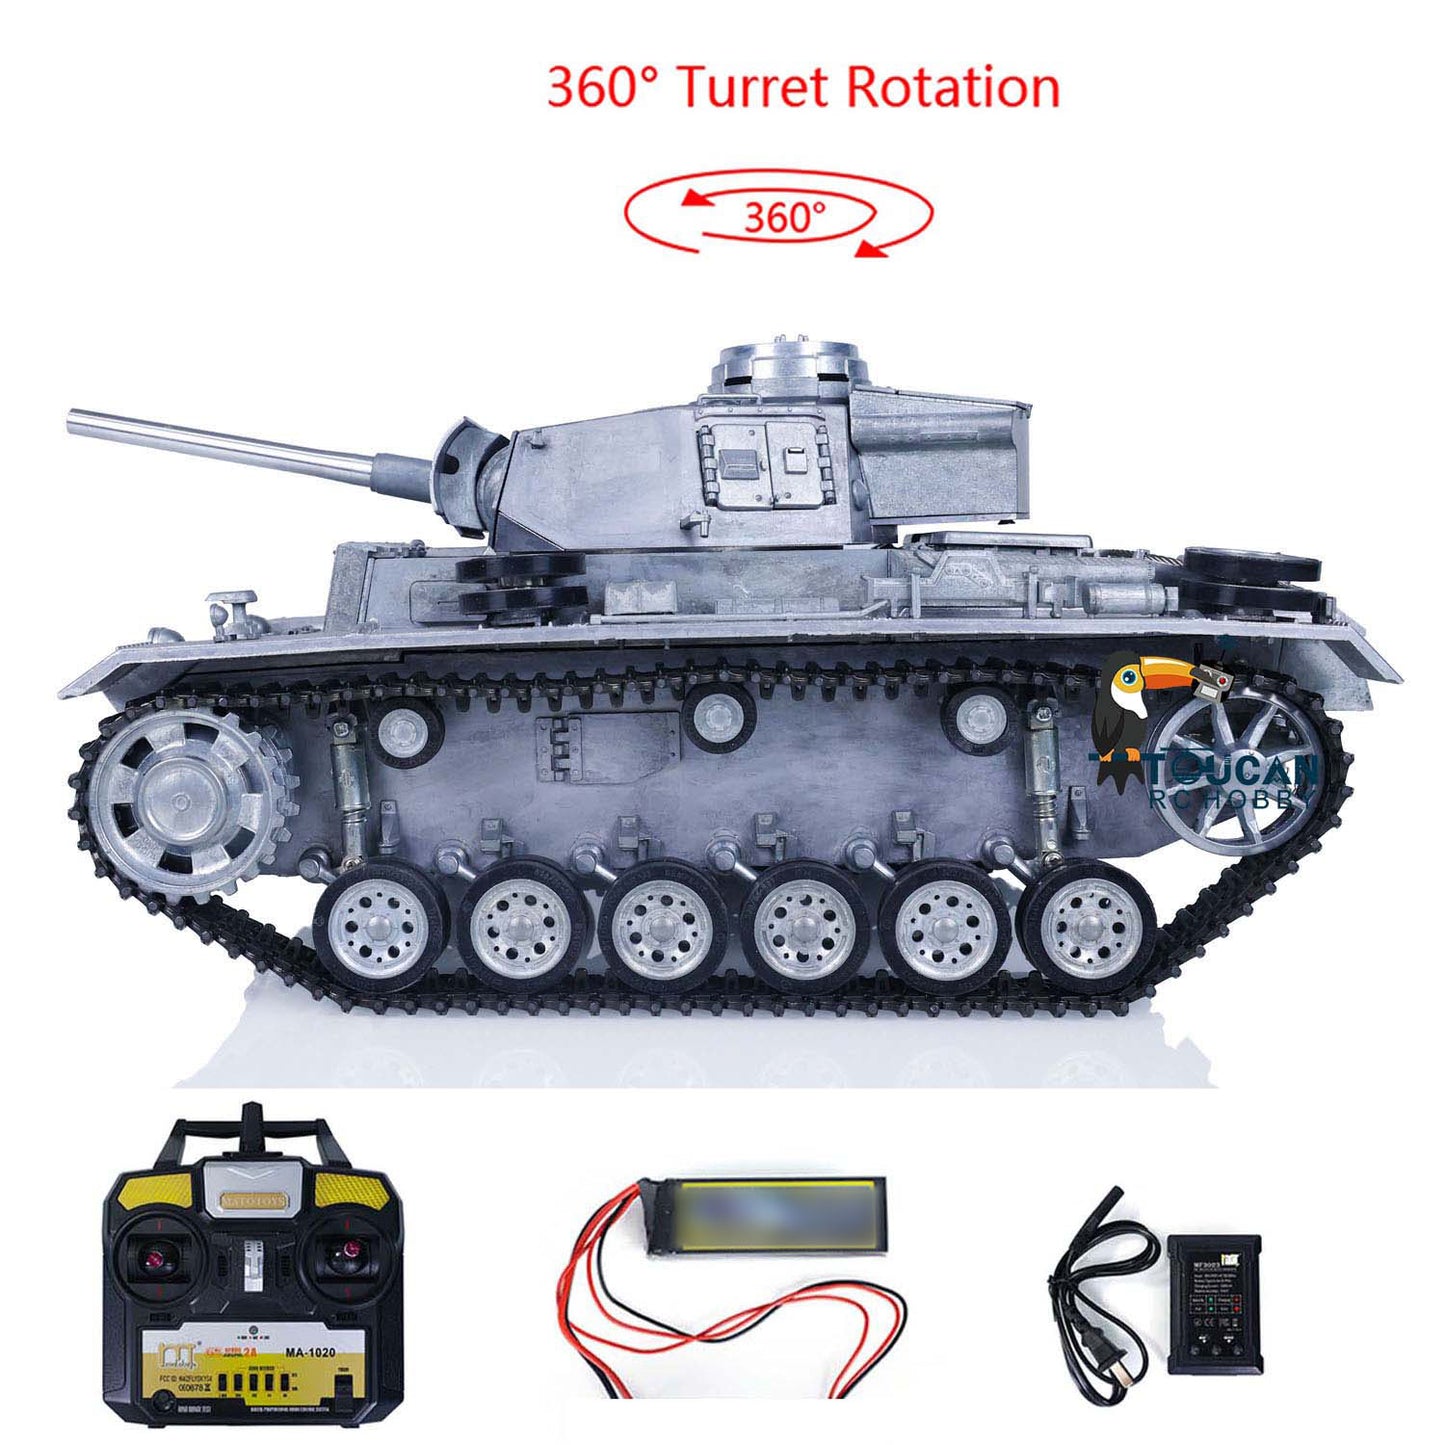 IN STOCK Mato 100% Metal 1/16 German Panzer III BB Shooting RTR Radio Control Tank Ready-To-Run 1223 2.4G Main Board Charger Receiver 360Degrees